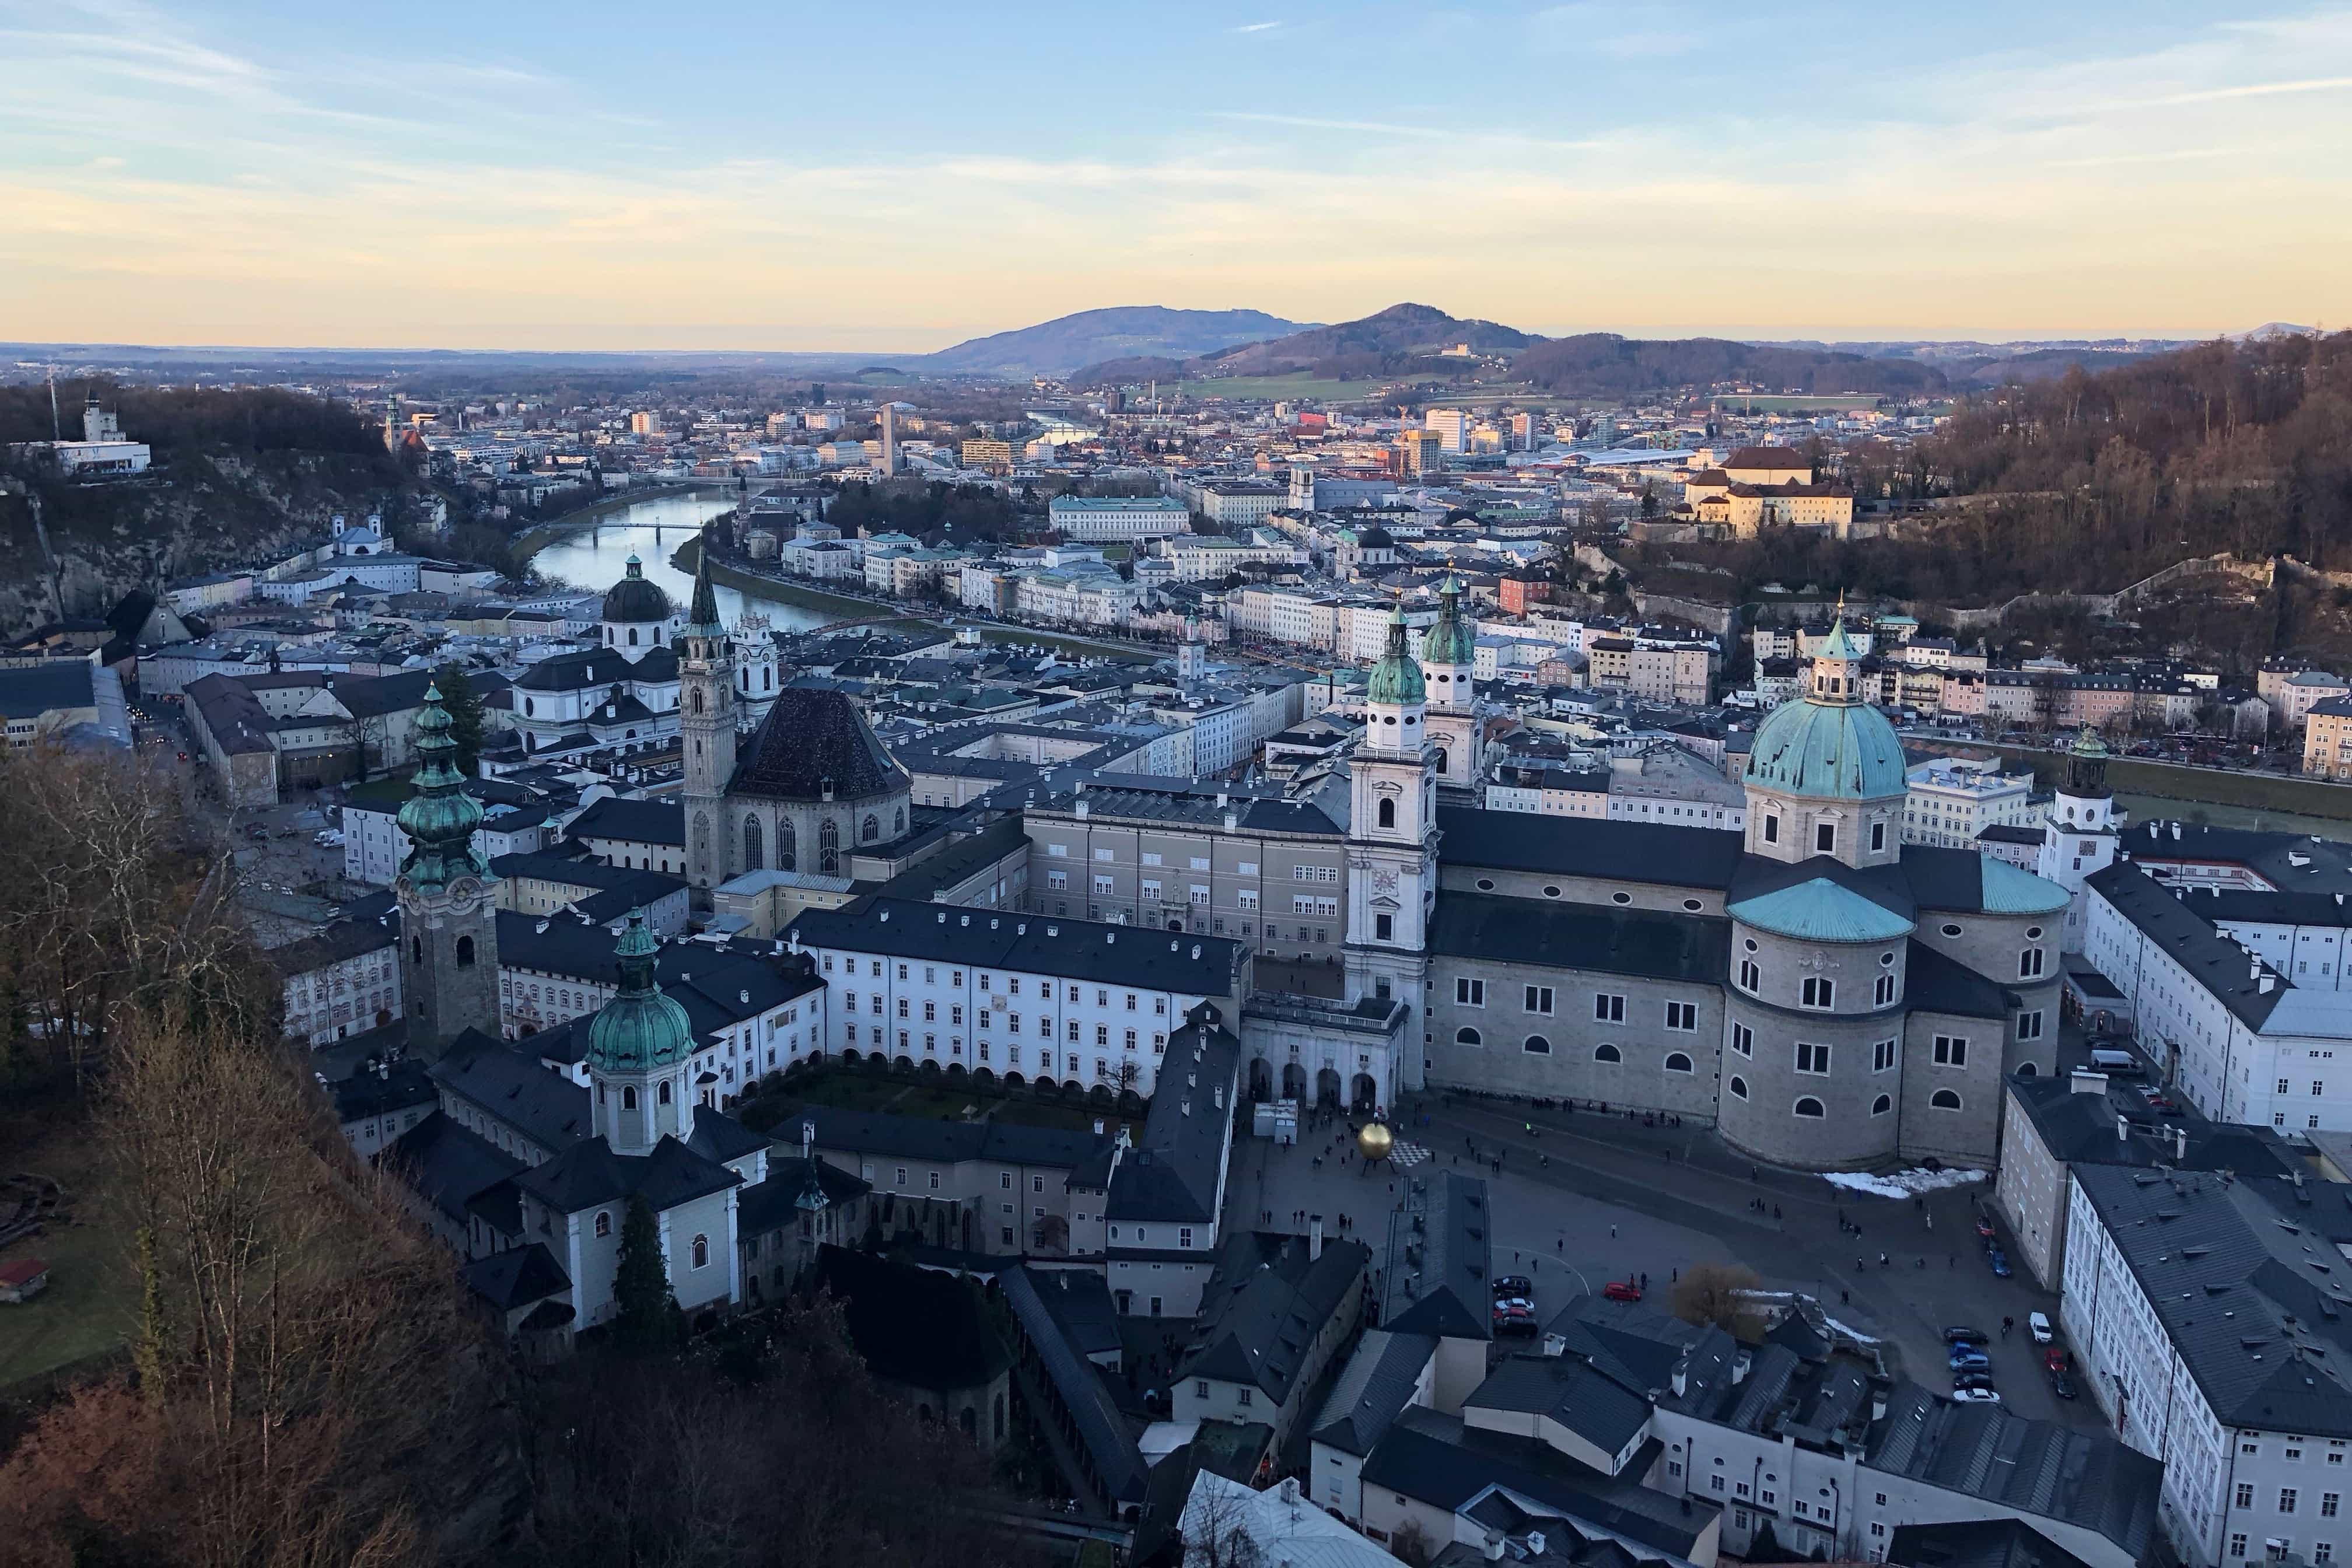 New Year’s Eve in Salzburg